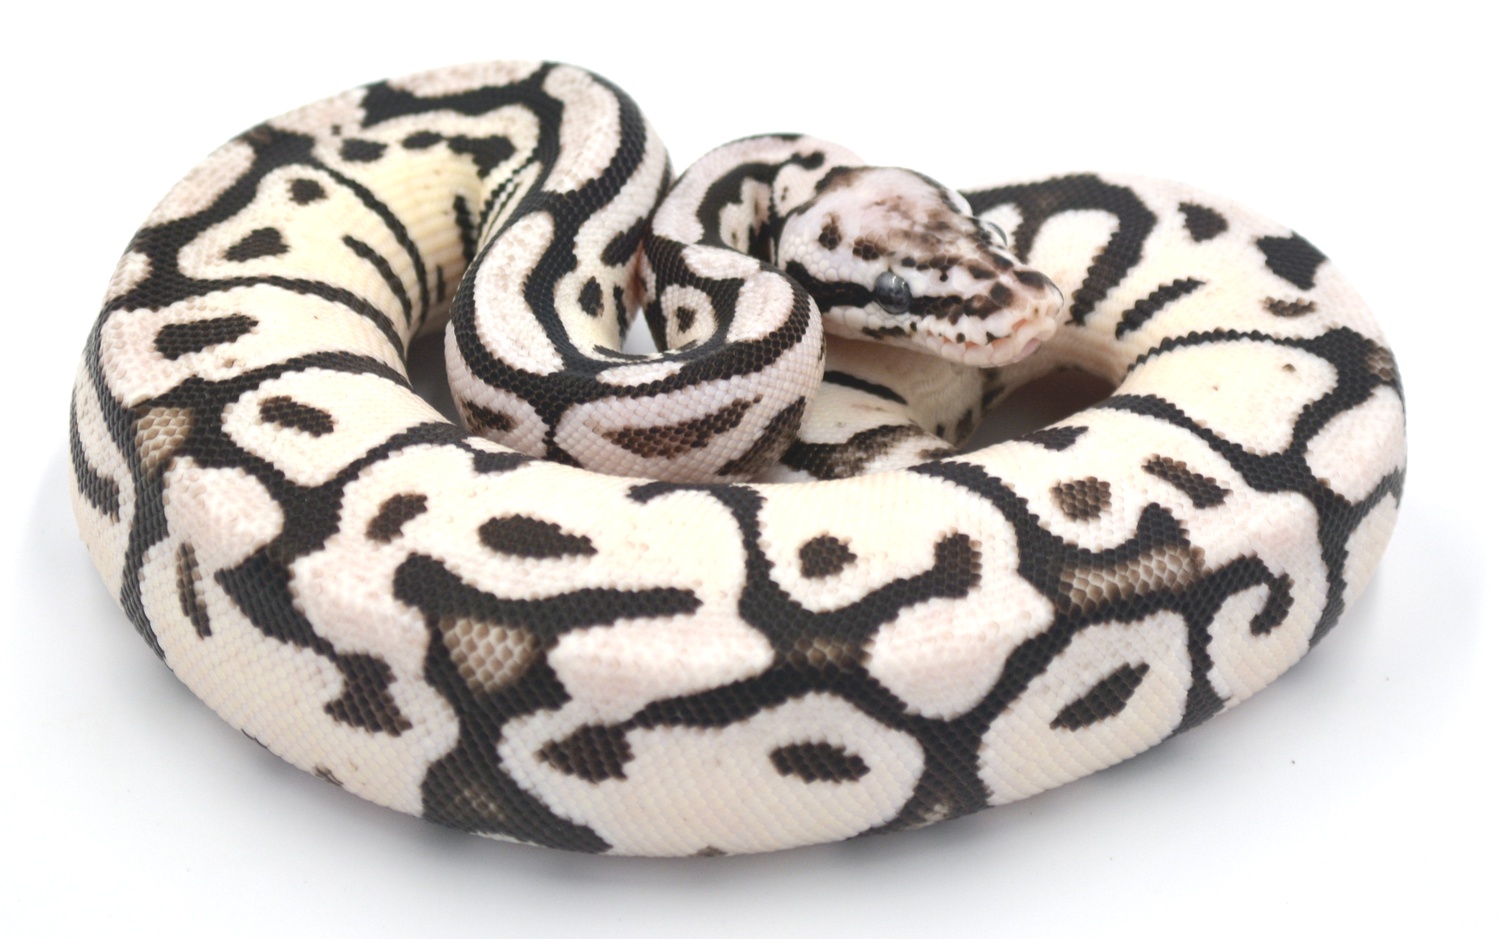 Pastel Vanilla Spotnose Vpi Axanthic Ball Python by Wreck room snakes